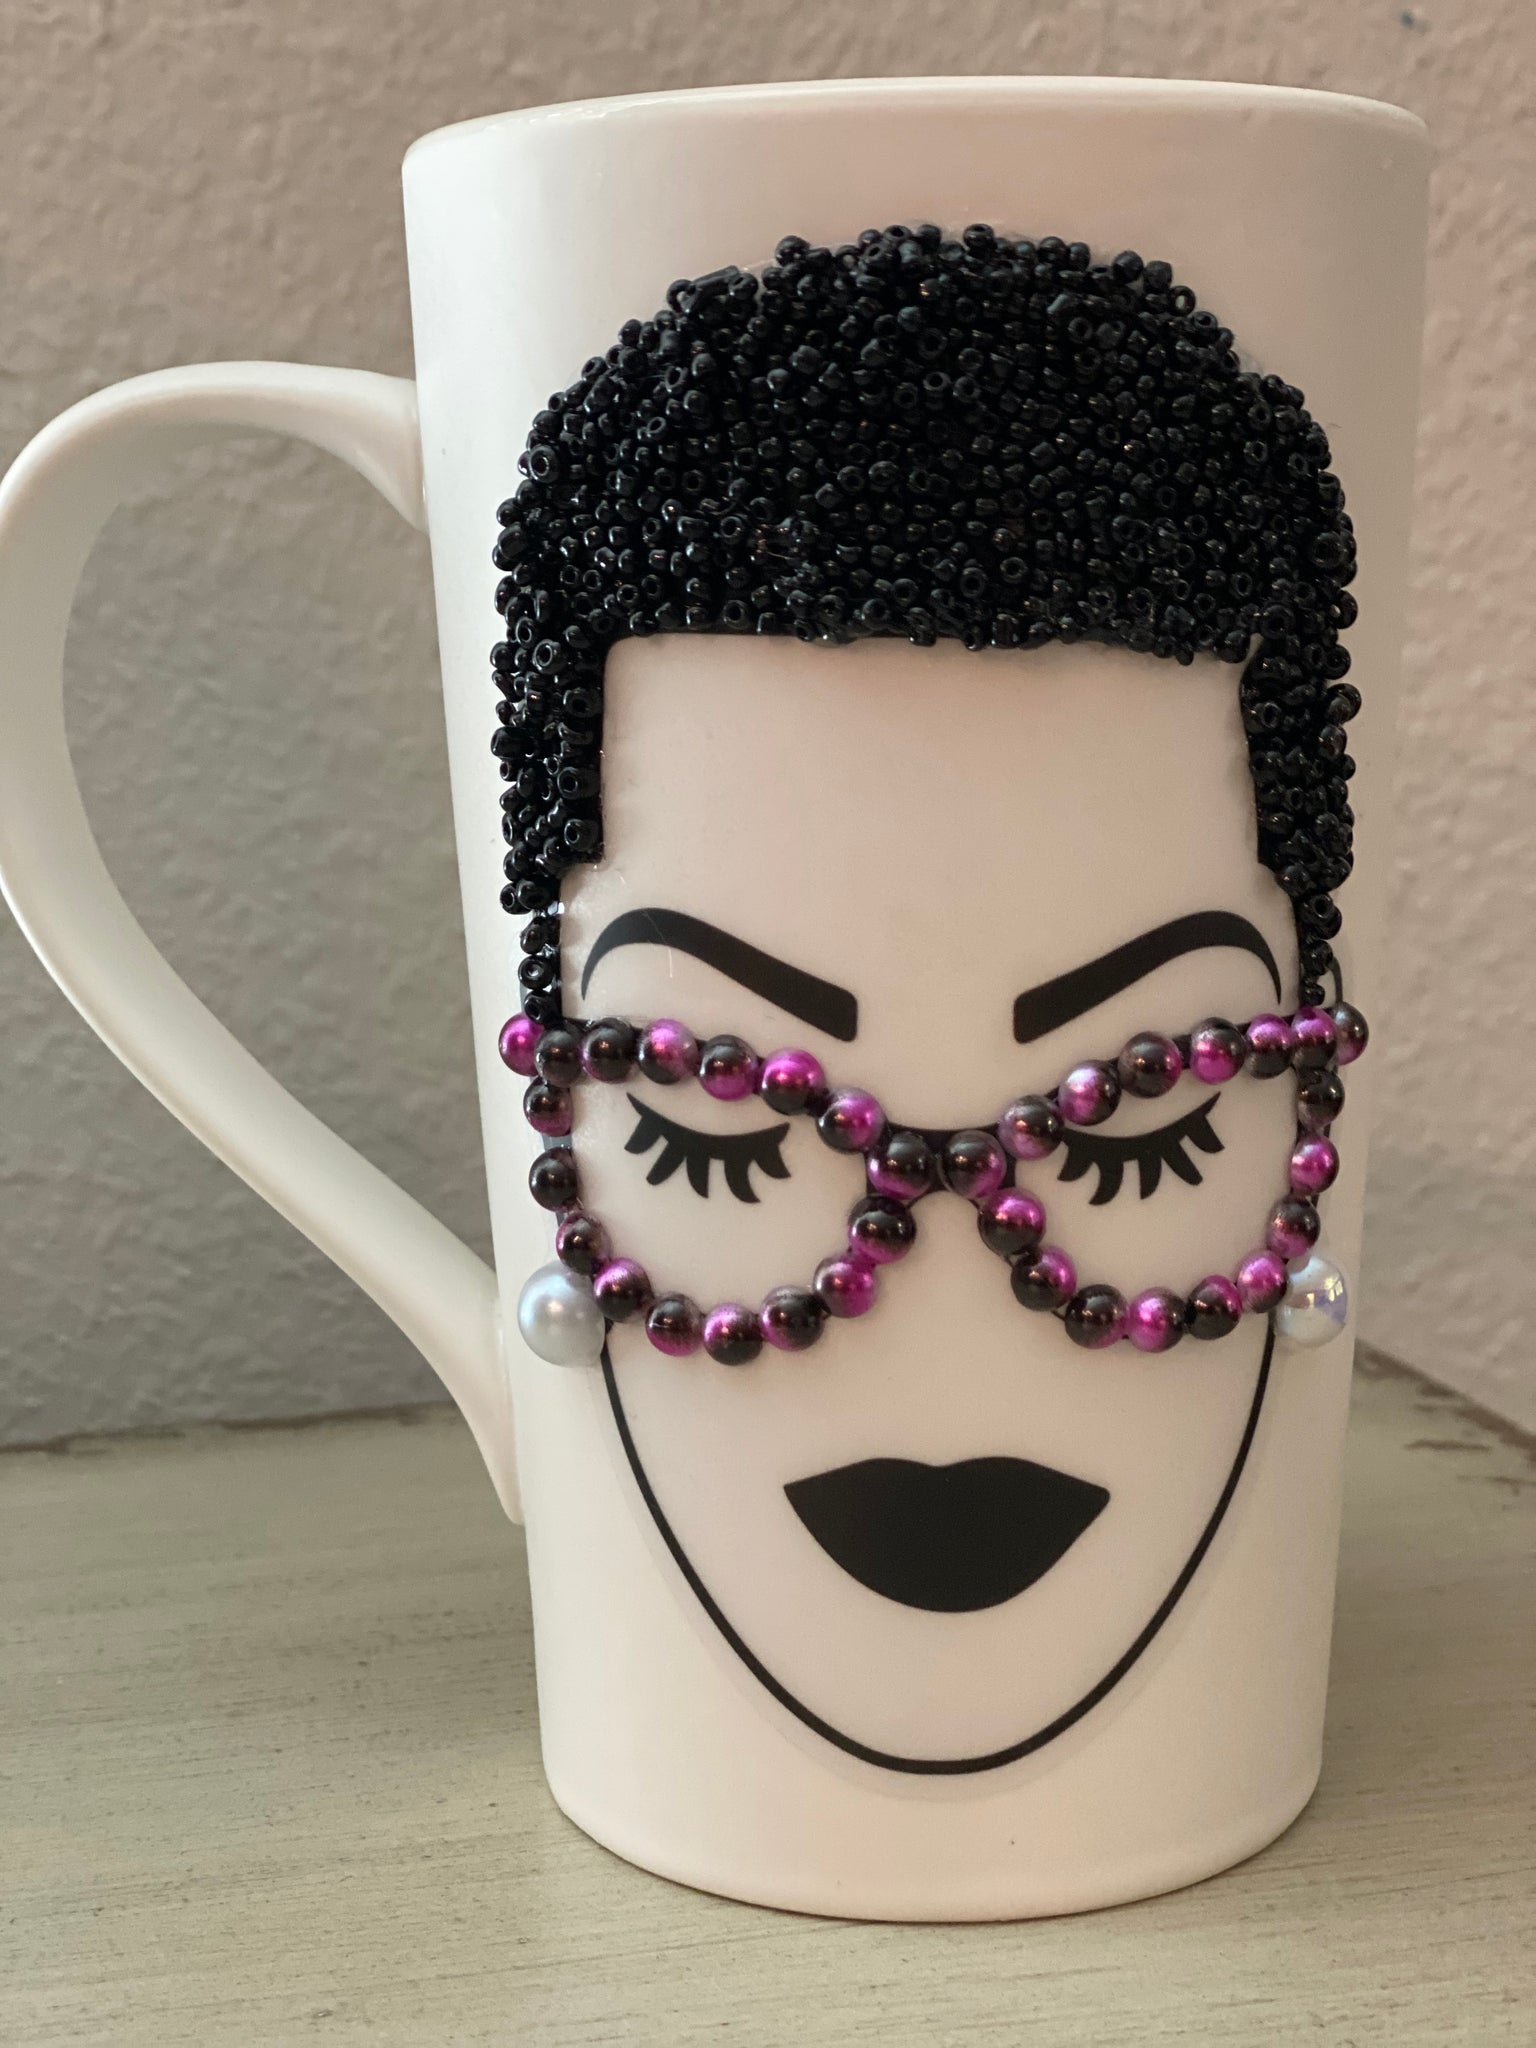 (New) Short-Cut Beauty - Large Bling Coffee Mug